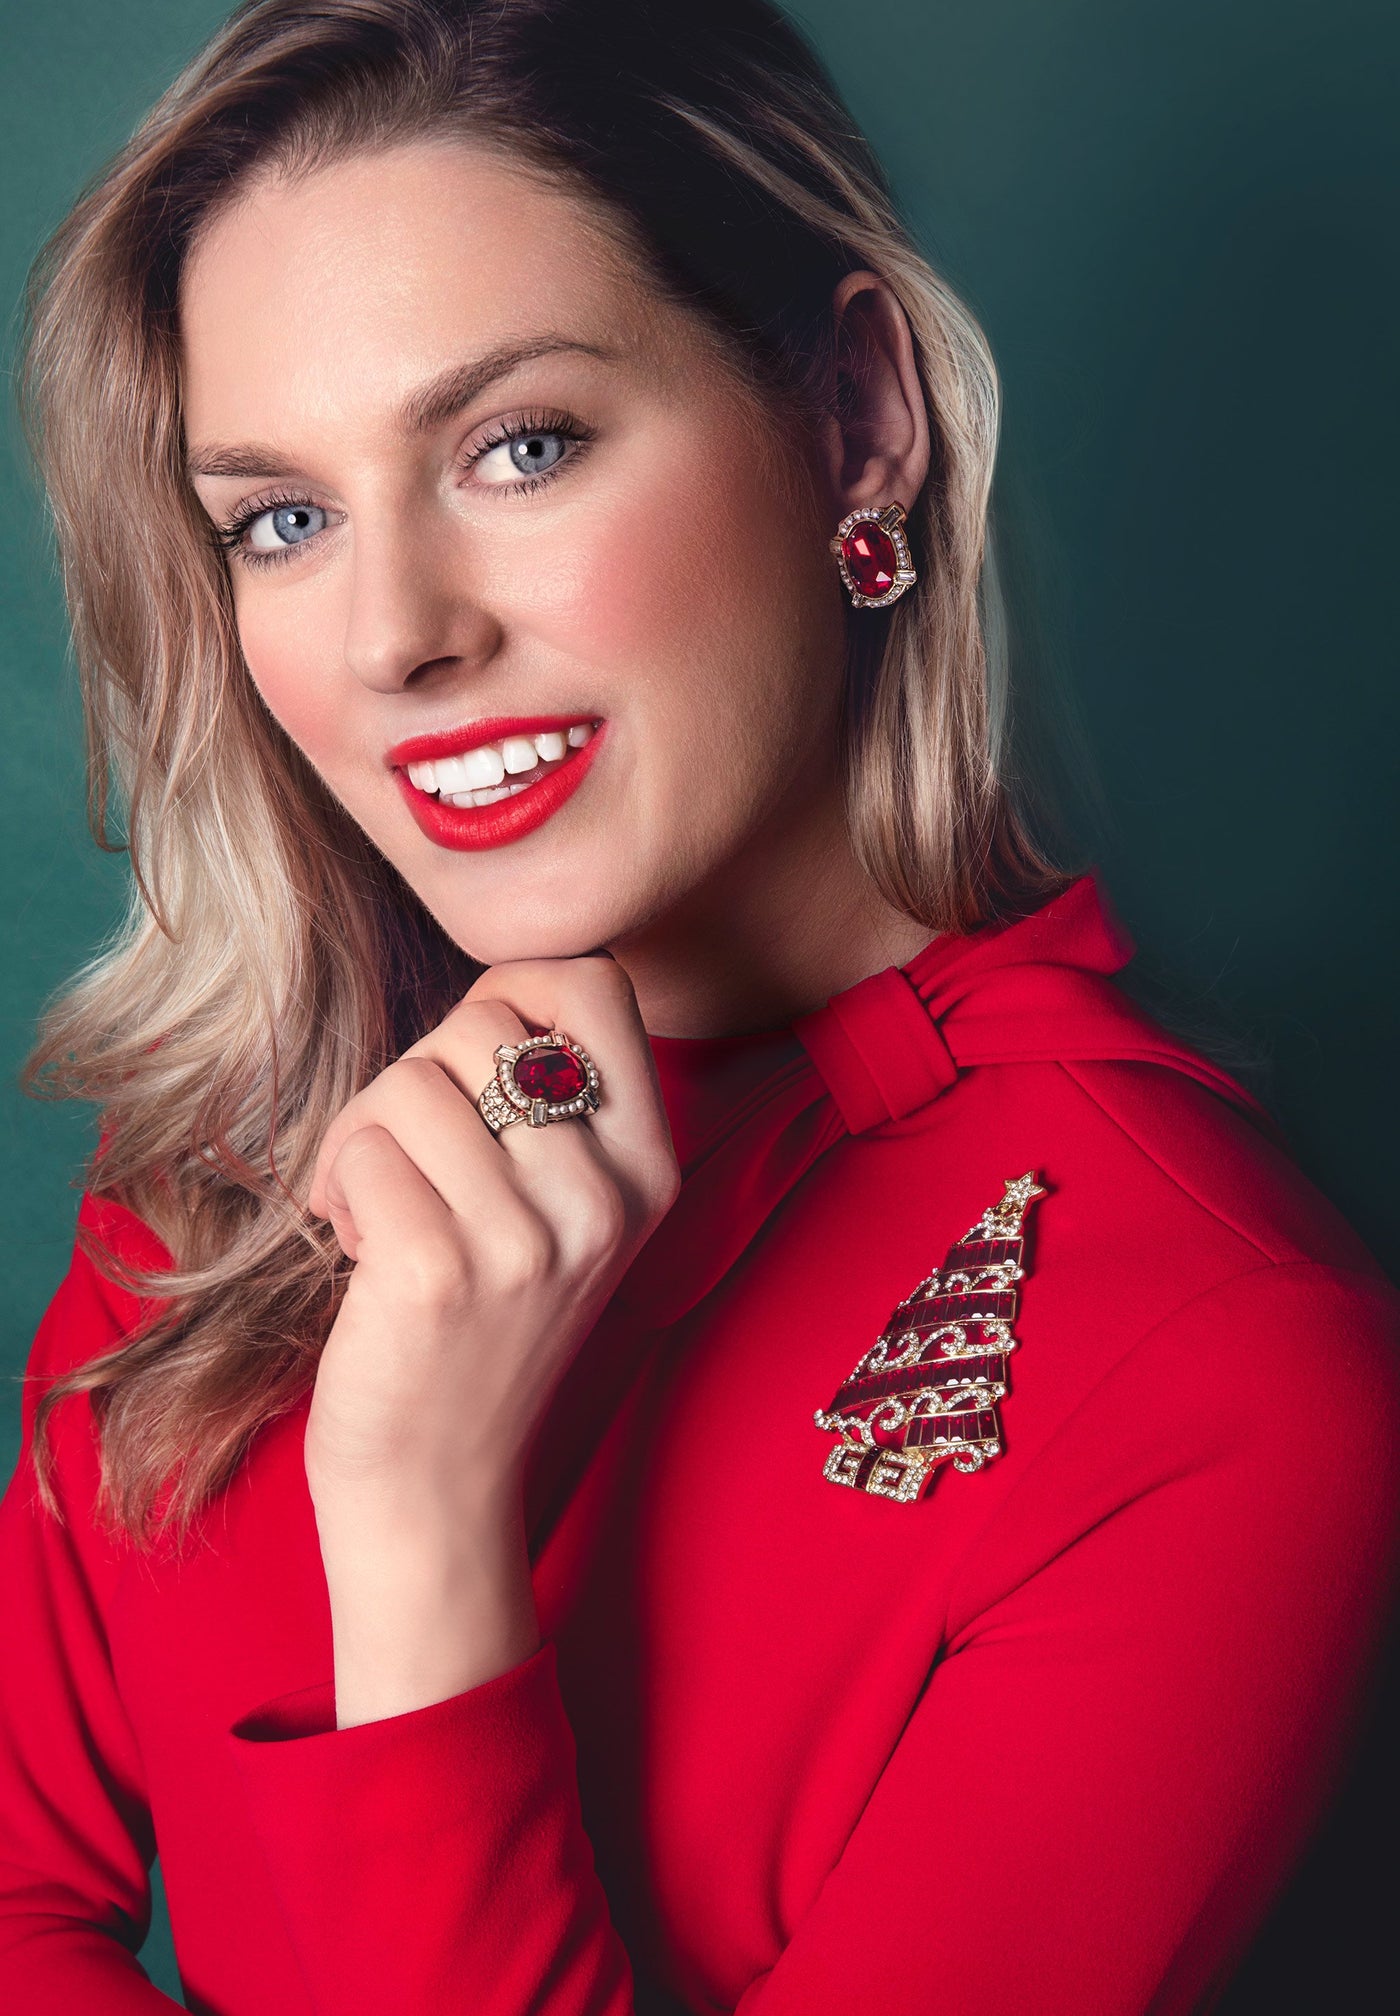 Heidi Daus®"Bold & Beautiful" Crystal Button Earring